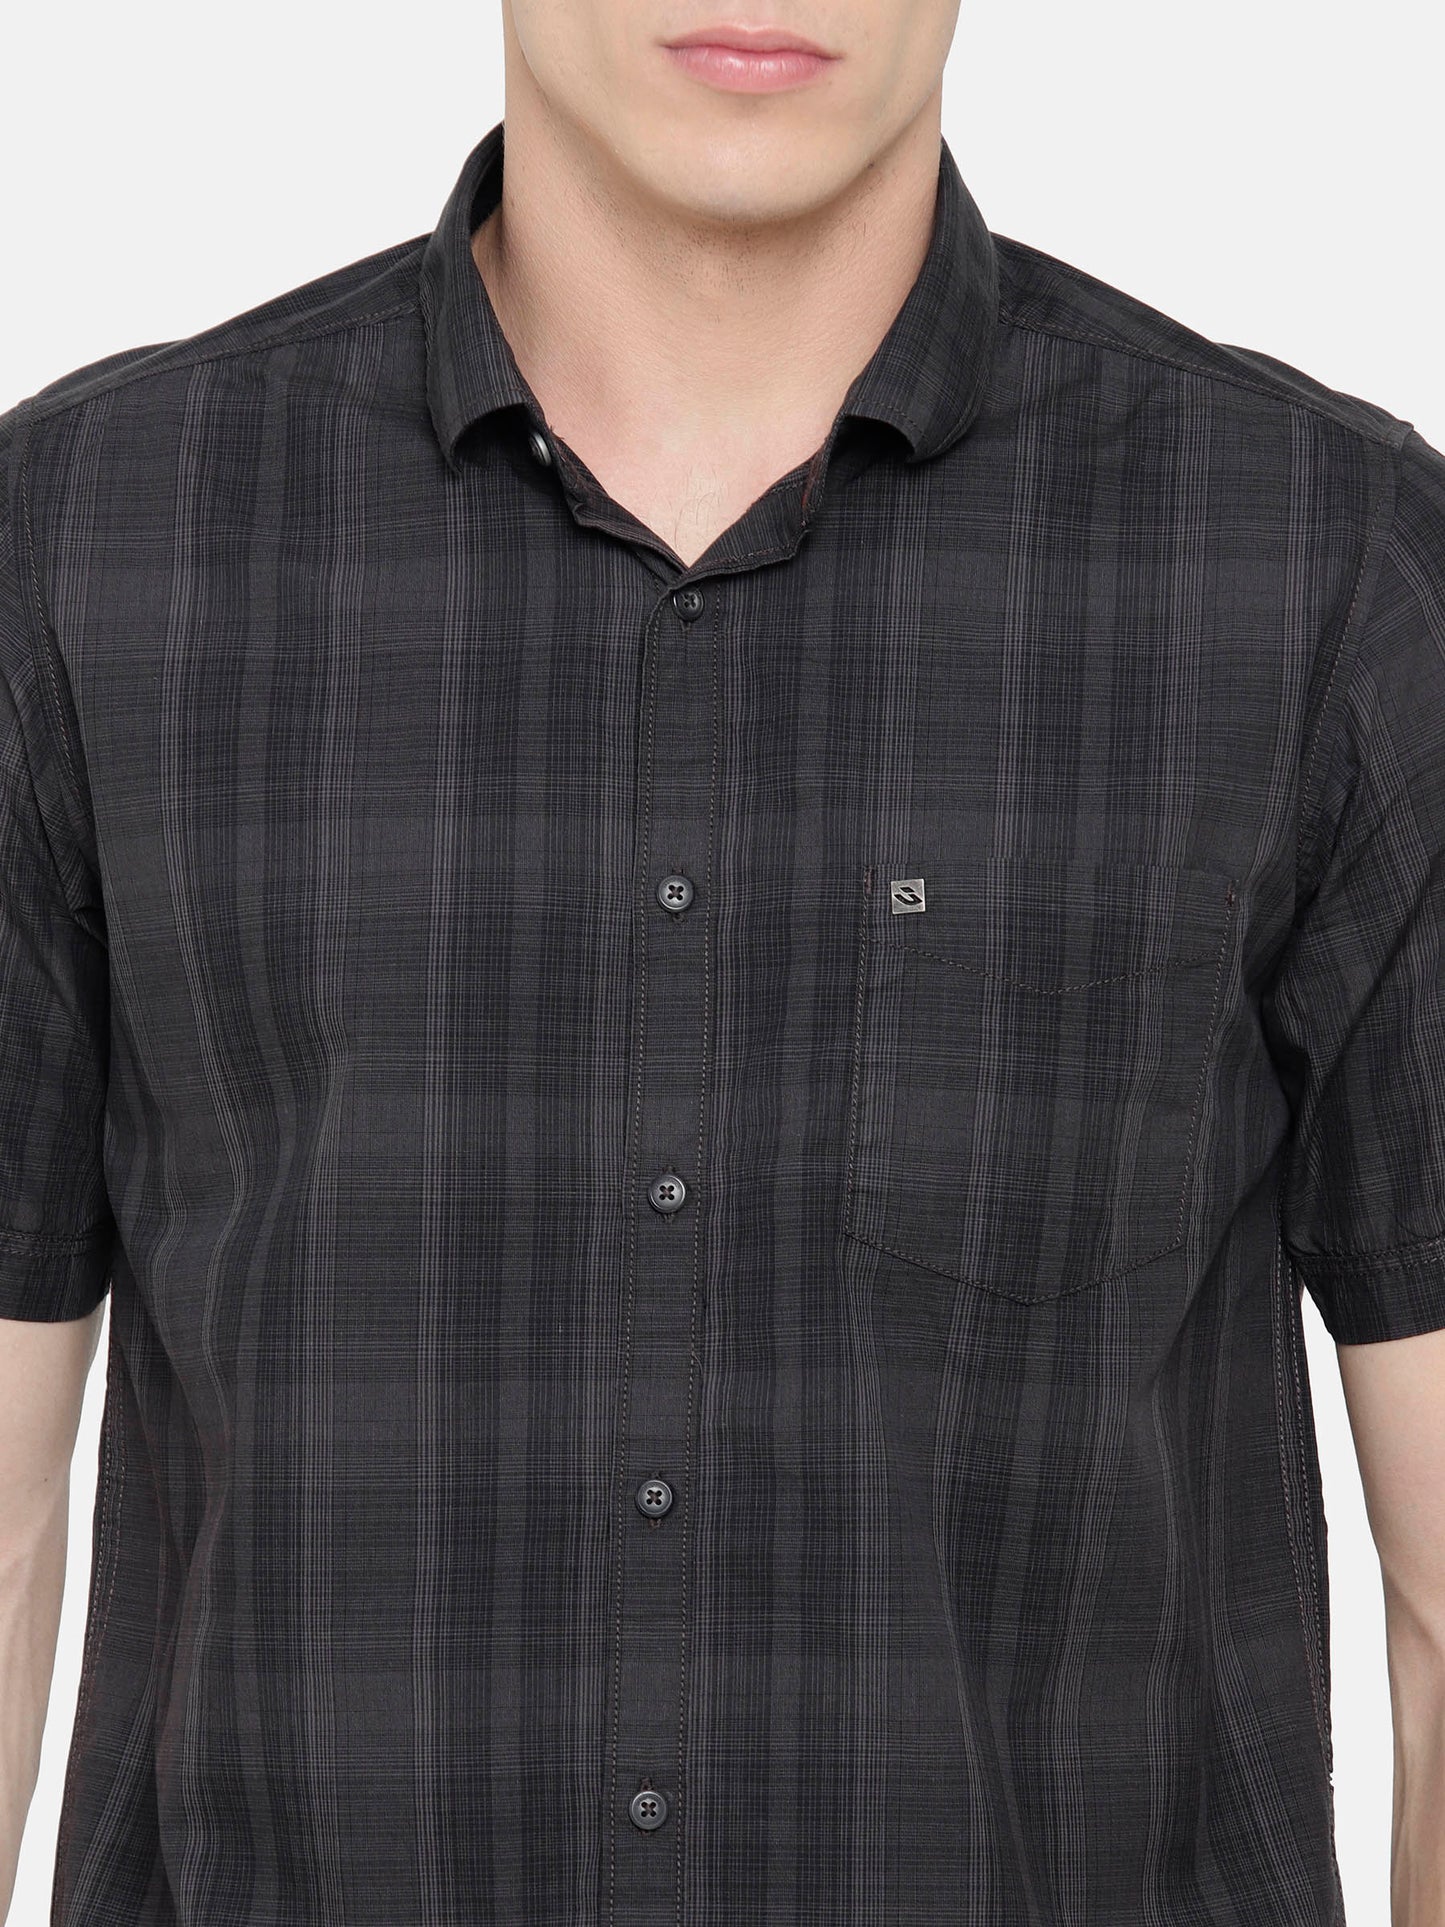 Charcoal Grey Checkered Shirt -Short Sleeve